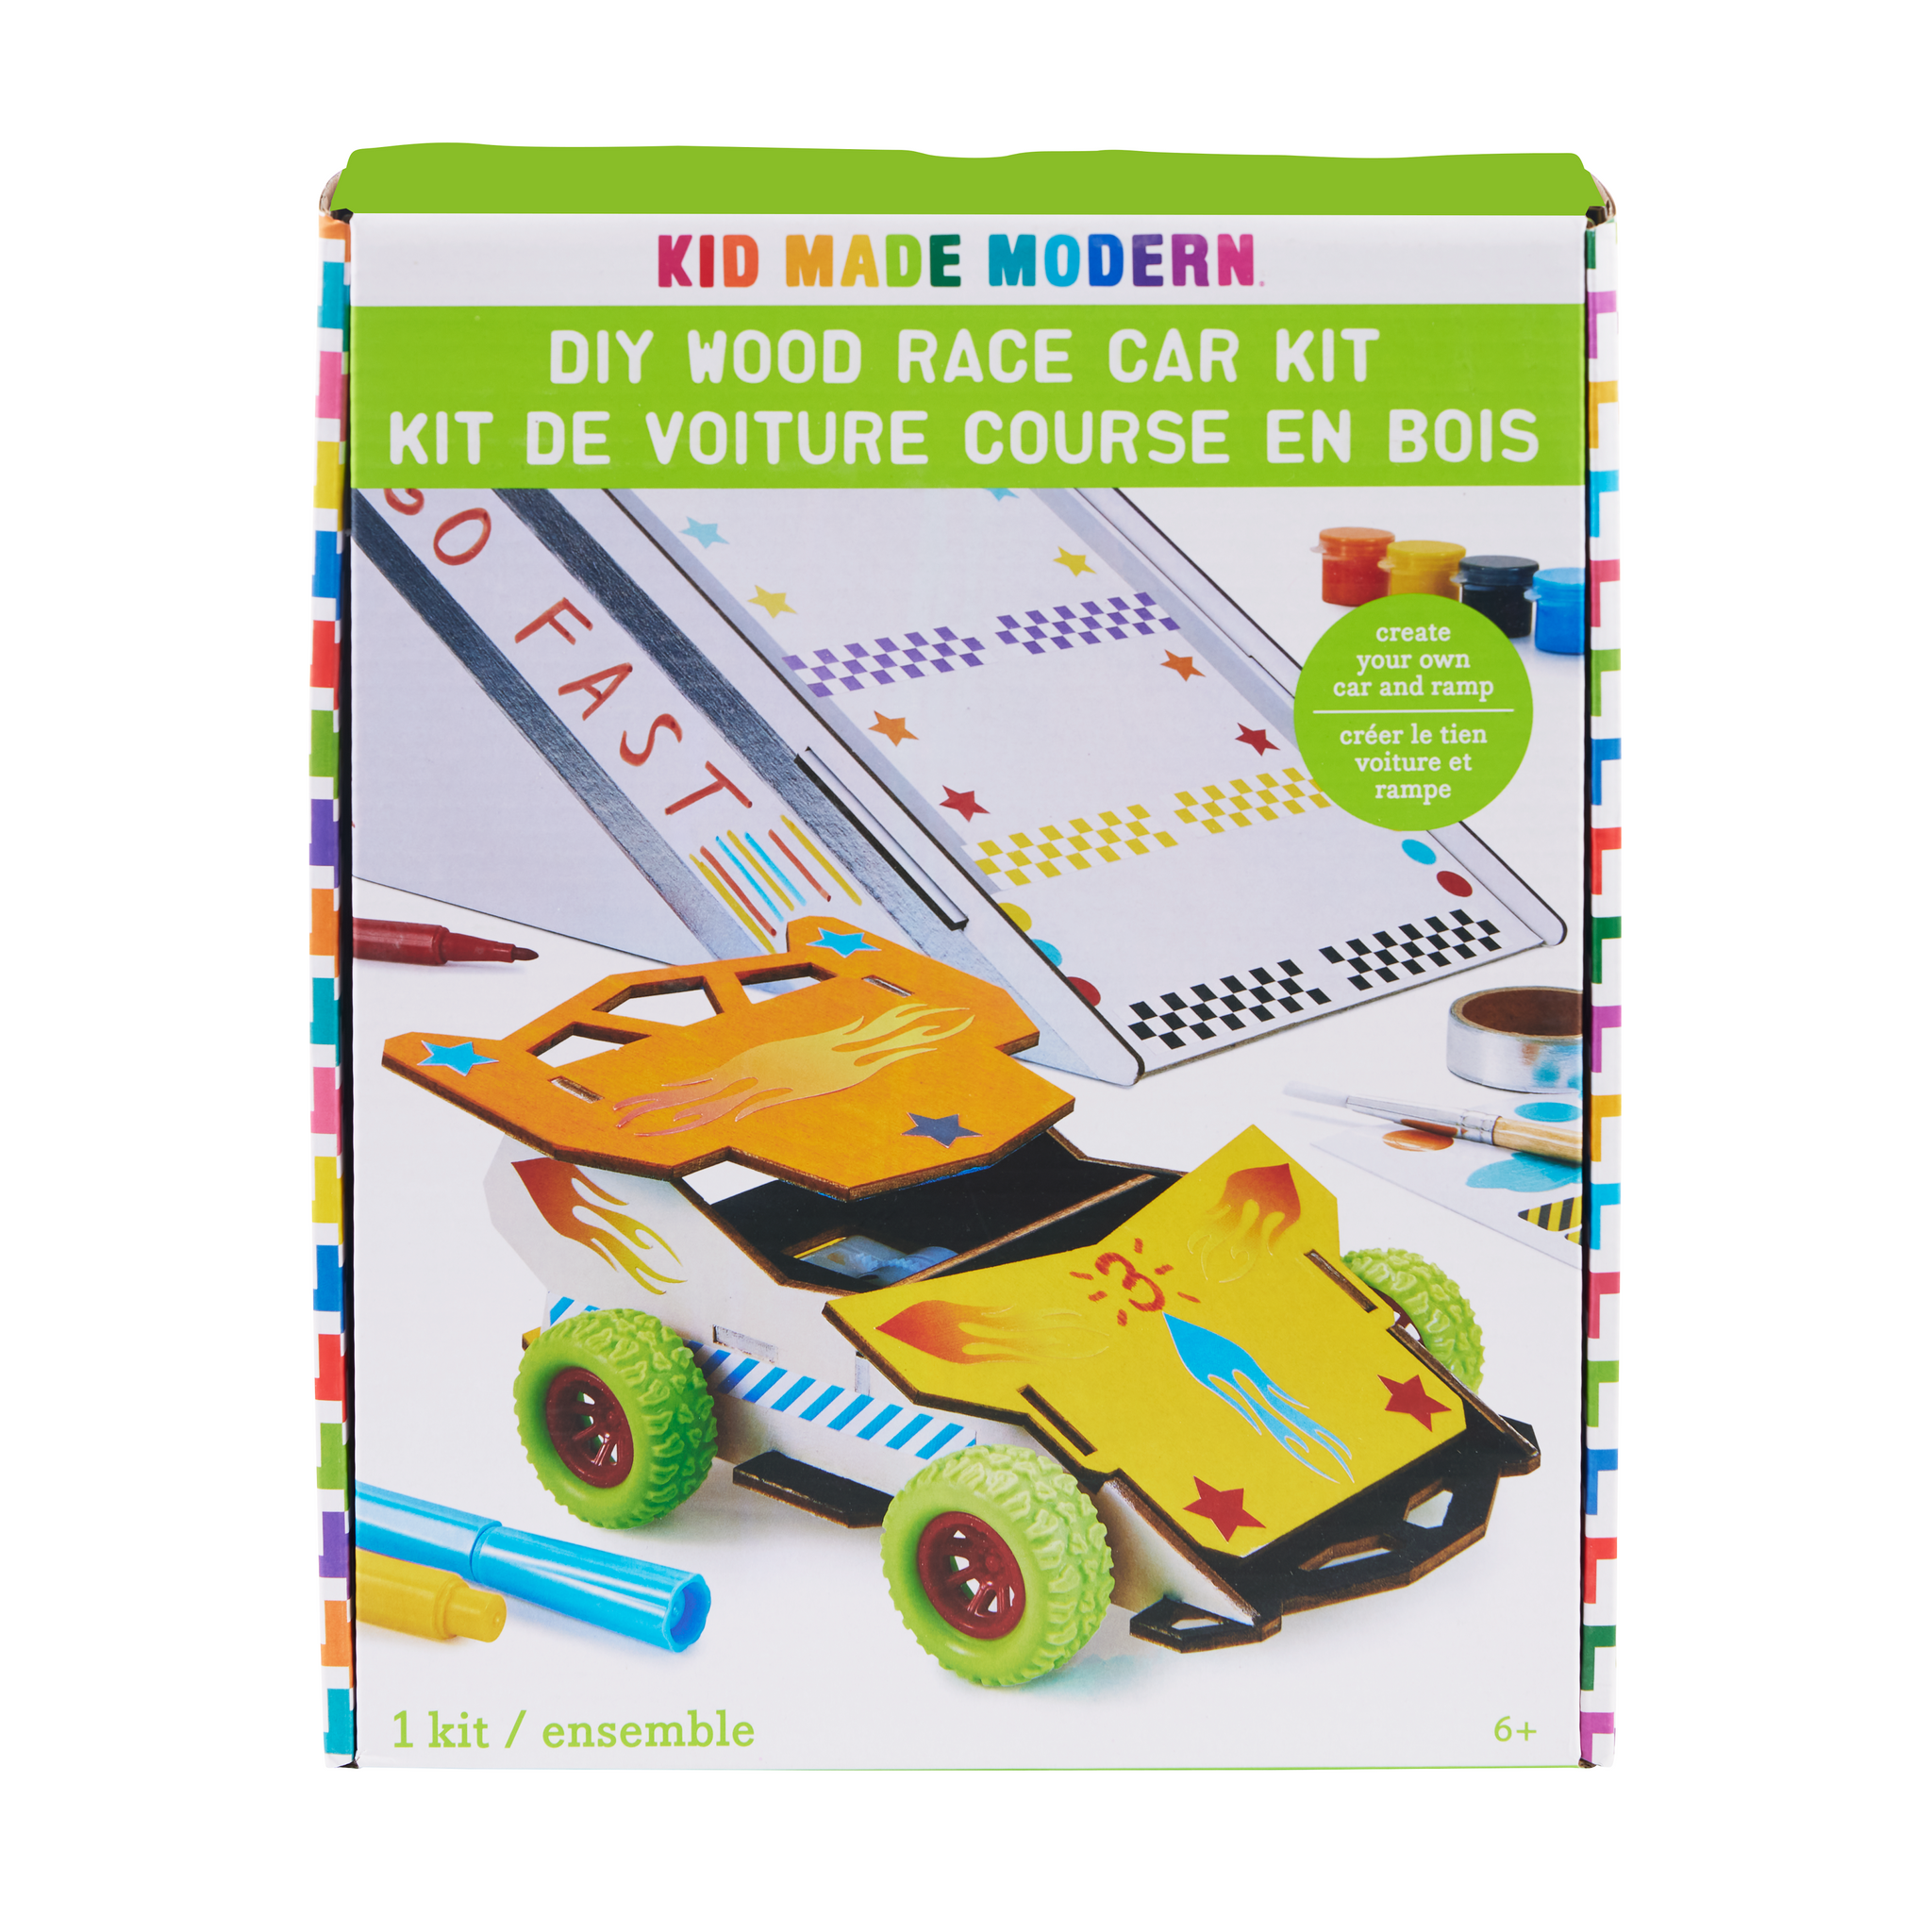 DIY Wood Craft Kit - Build & Paint Your Own Wooden Racing Car